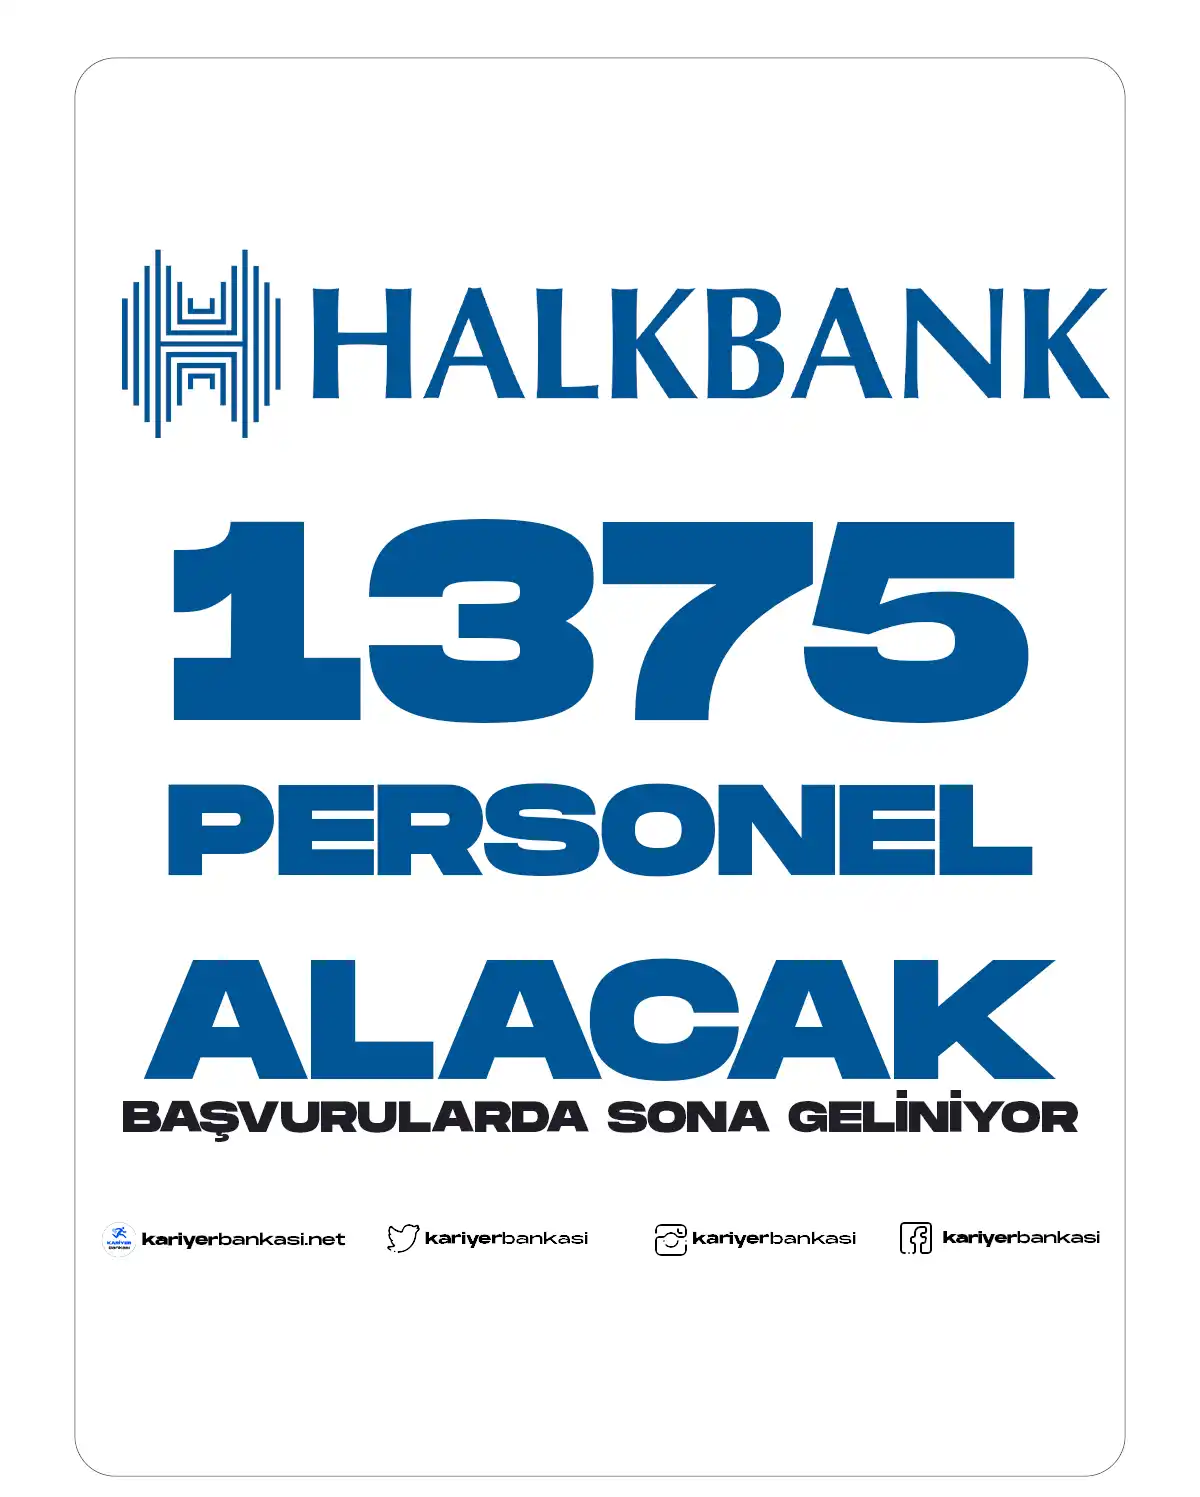 Halkbank 1375 Personel Alımı